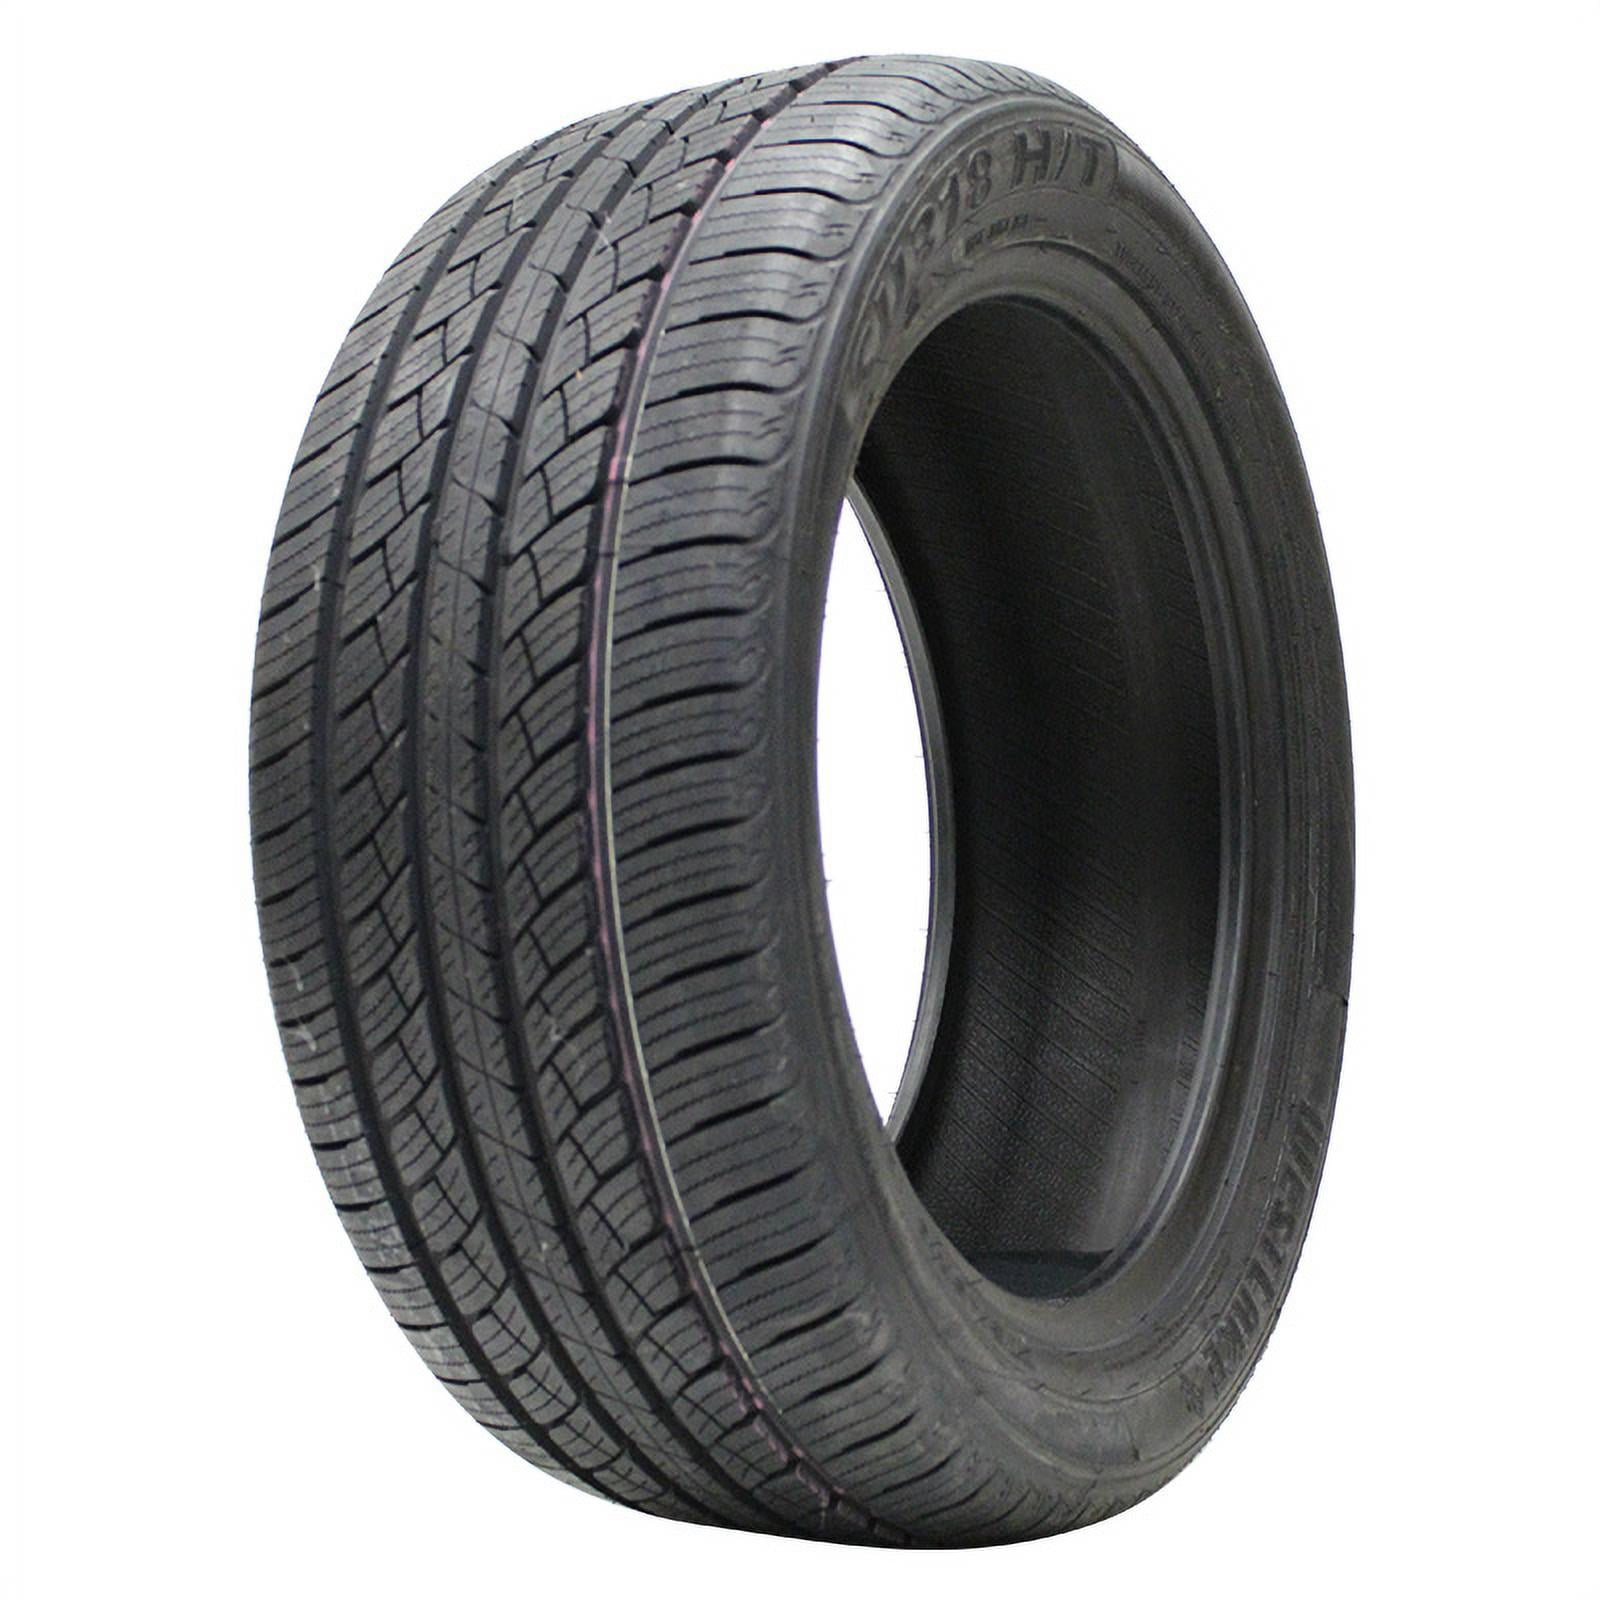 245/75R16 Westlake SU318 All-Season Radial Tire 